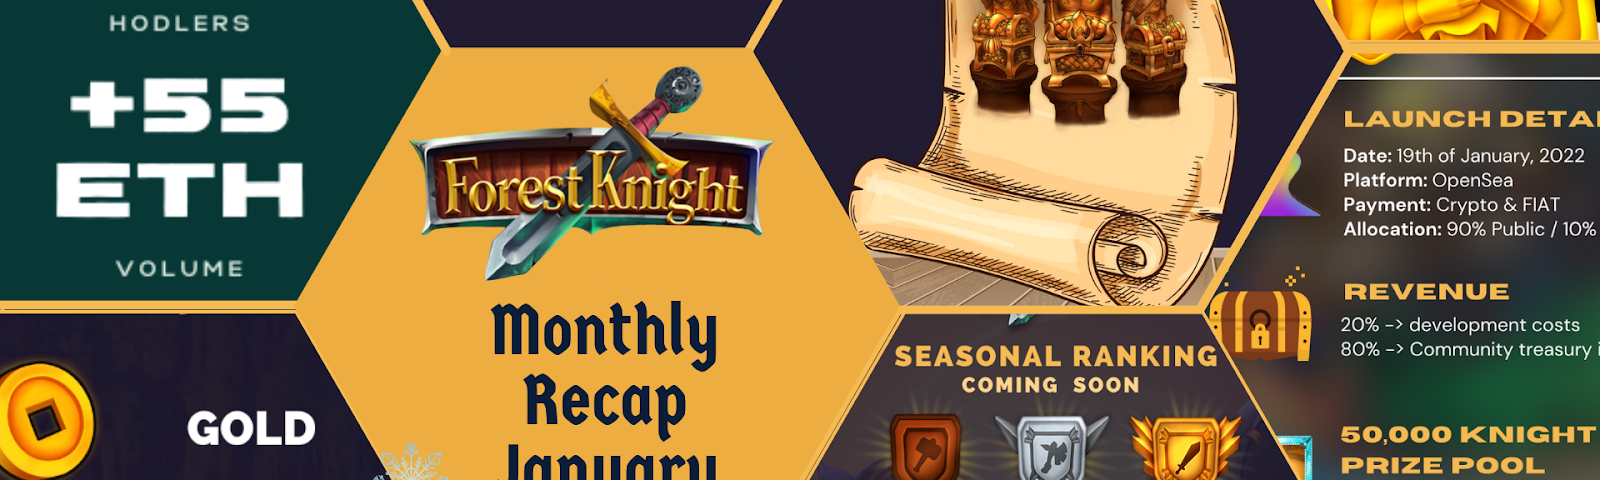 Forest Knight — January Monthly Recap — 55 ETH INO Trading Volume, Seasonal Ranking, Gamrey’s Treasures, etc.